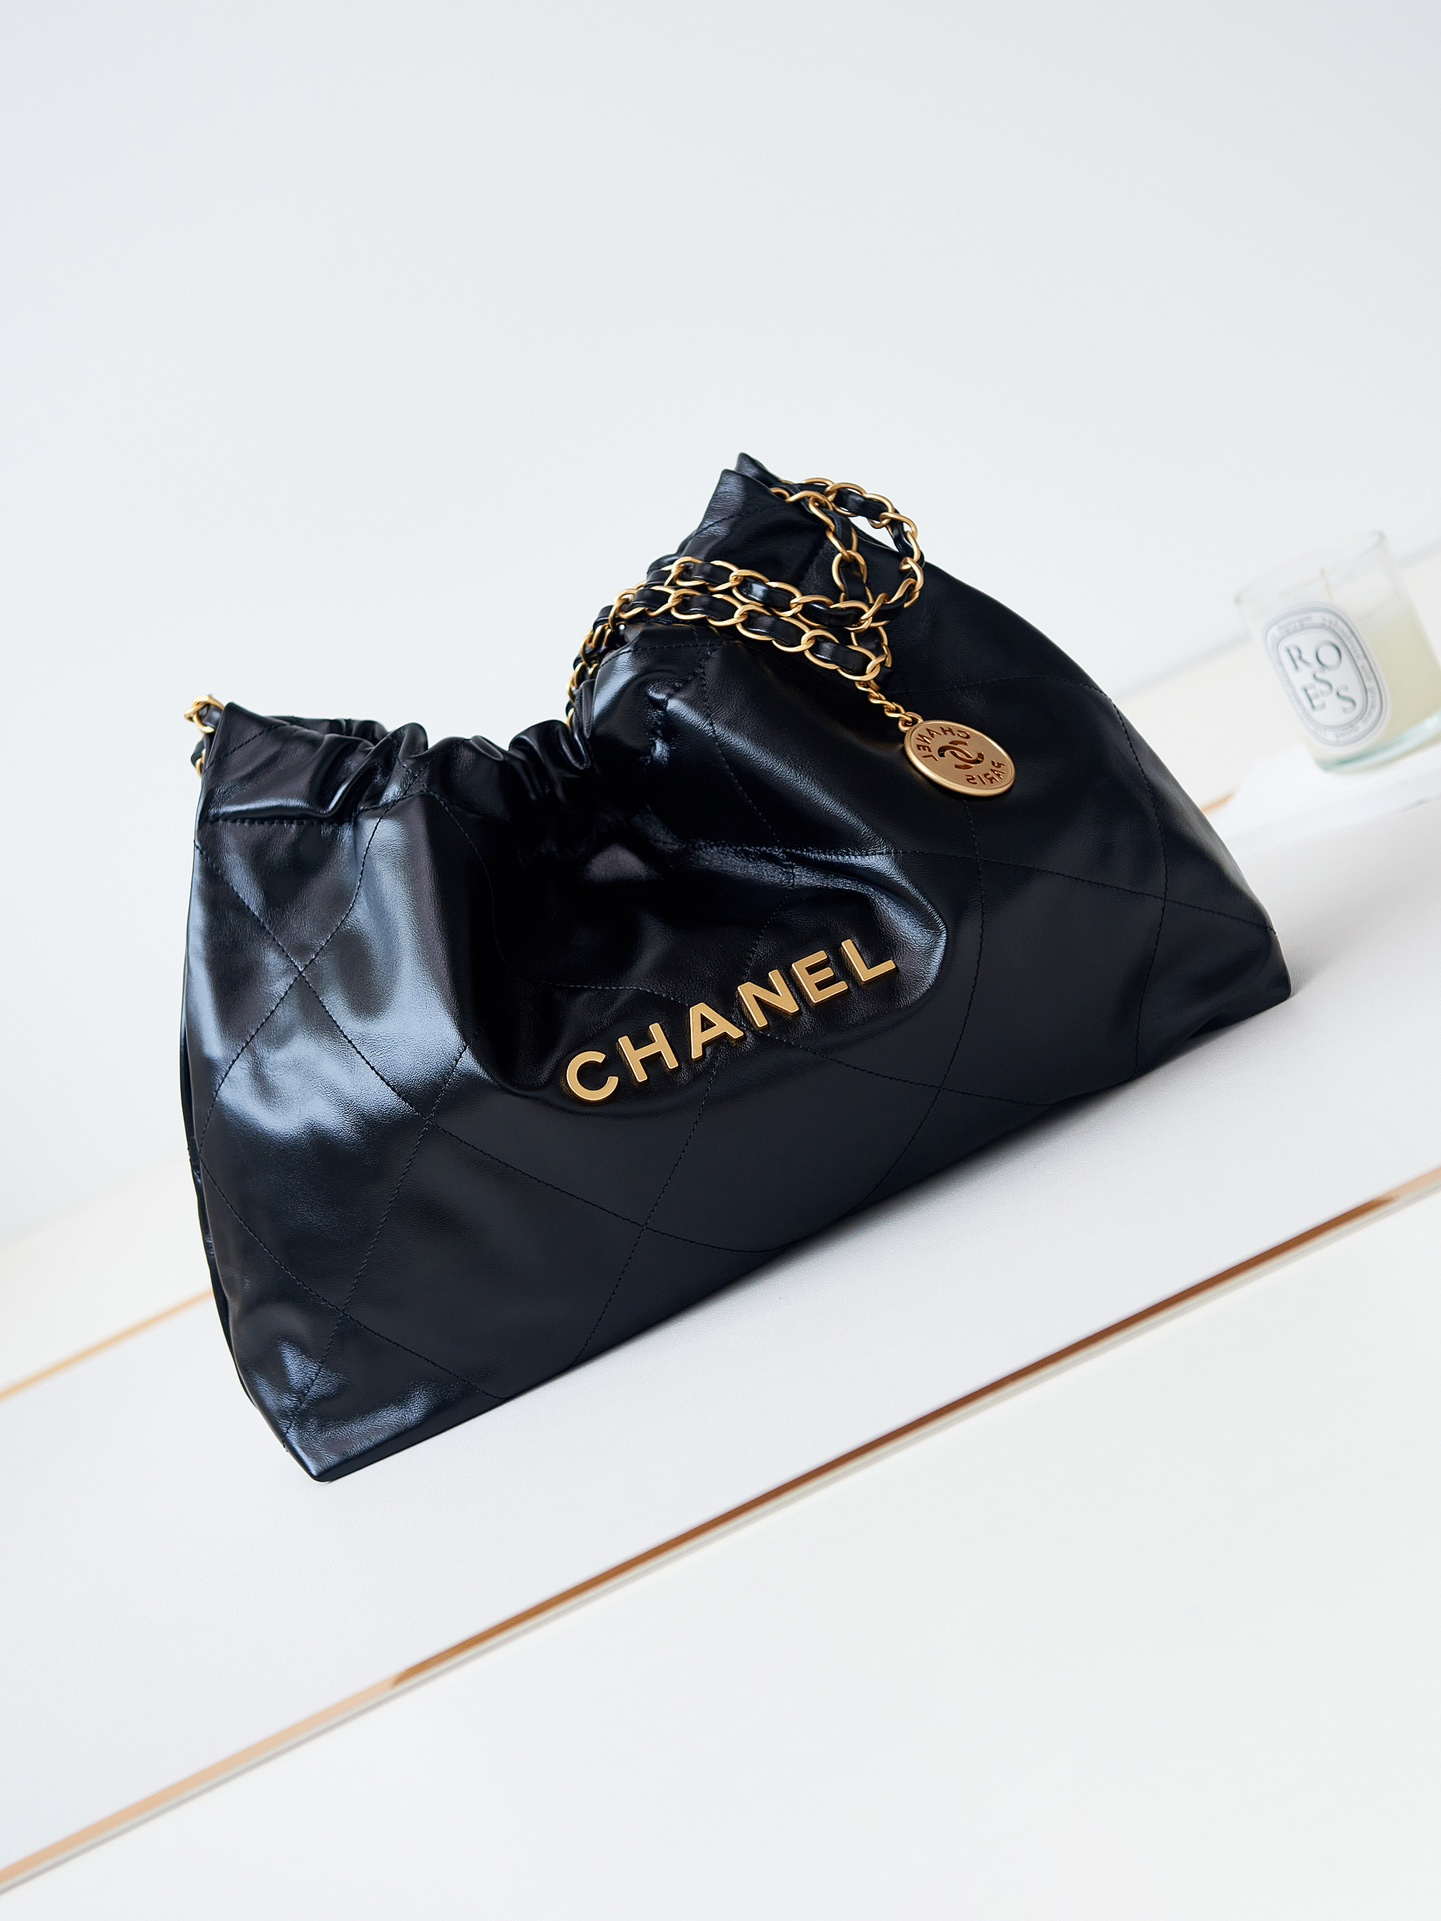 chanel-22-as4486-small-handbag-shiny-calfskin-black-with-gold-010-luxibags.ru